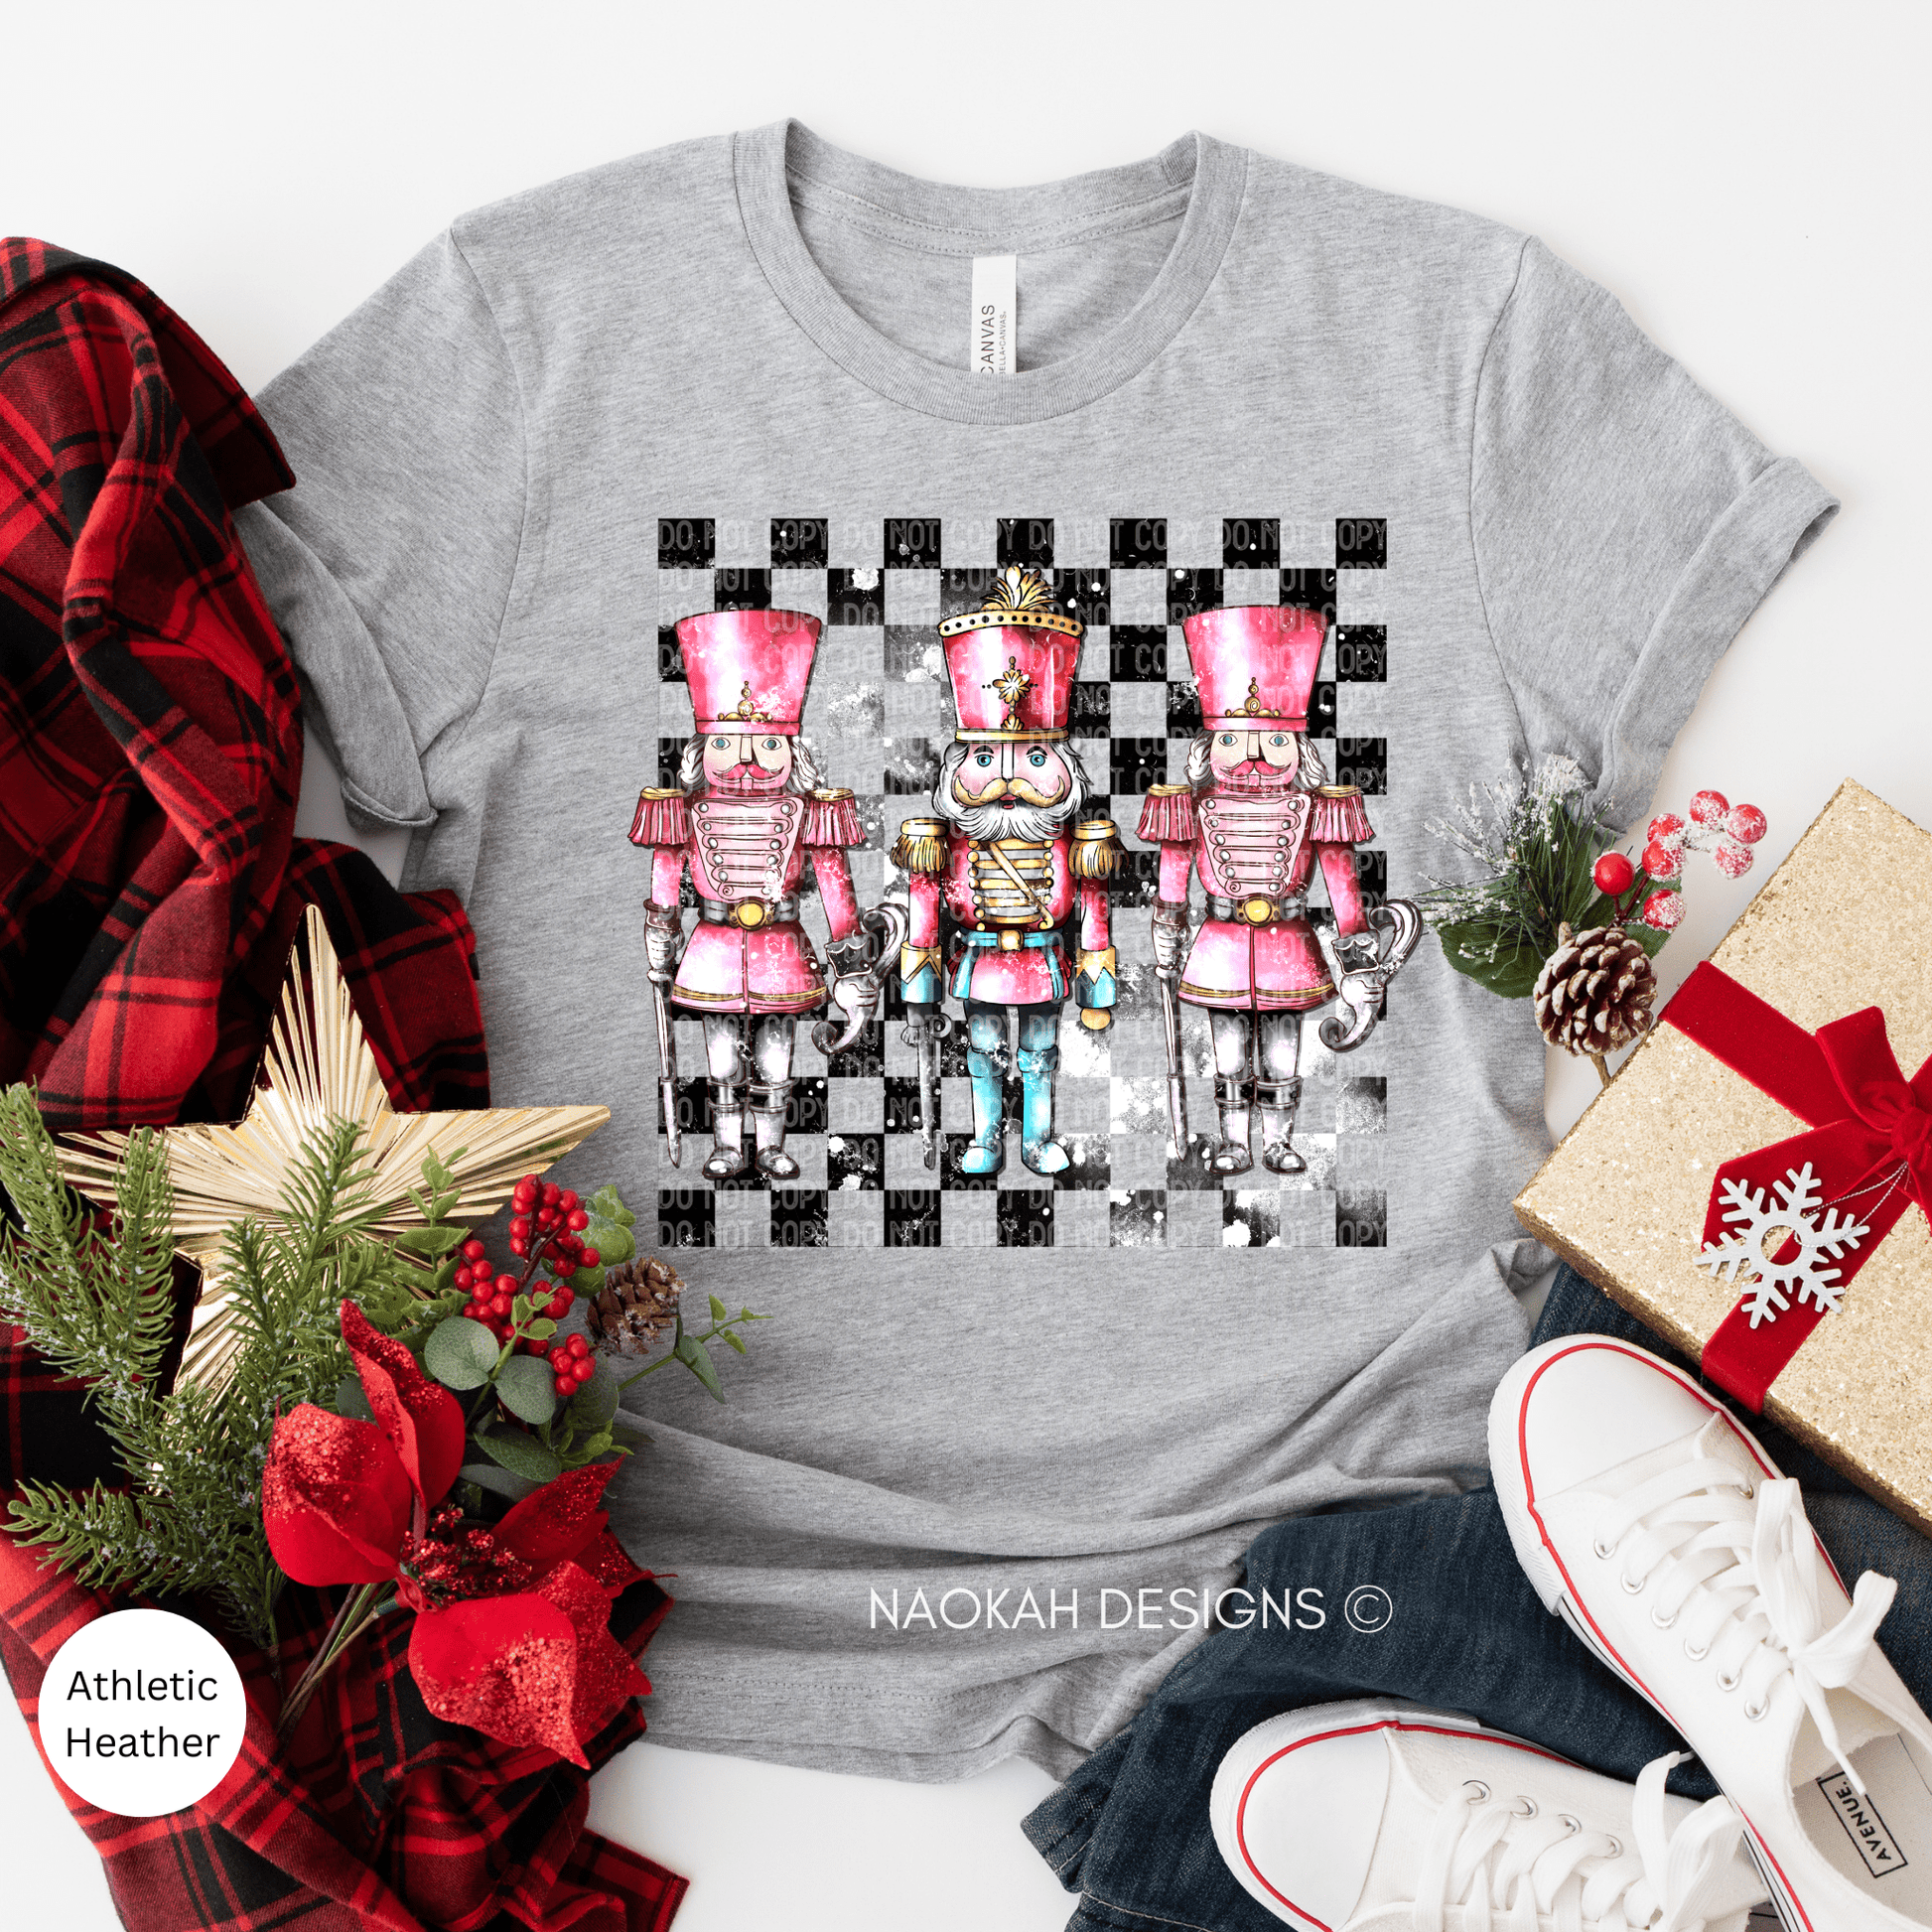 Christmas Nutcracker Shirts, Pink Retro Nutcracker Shirt, Nutcracker Ballet Shirt, Sugar Plum Fairy, Groovy Checkered Christmas Holiday